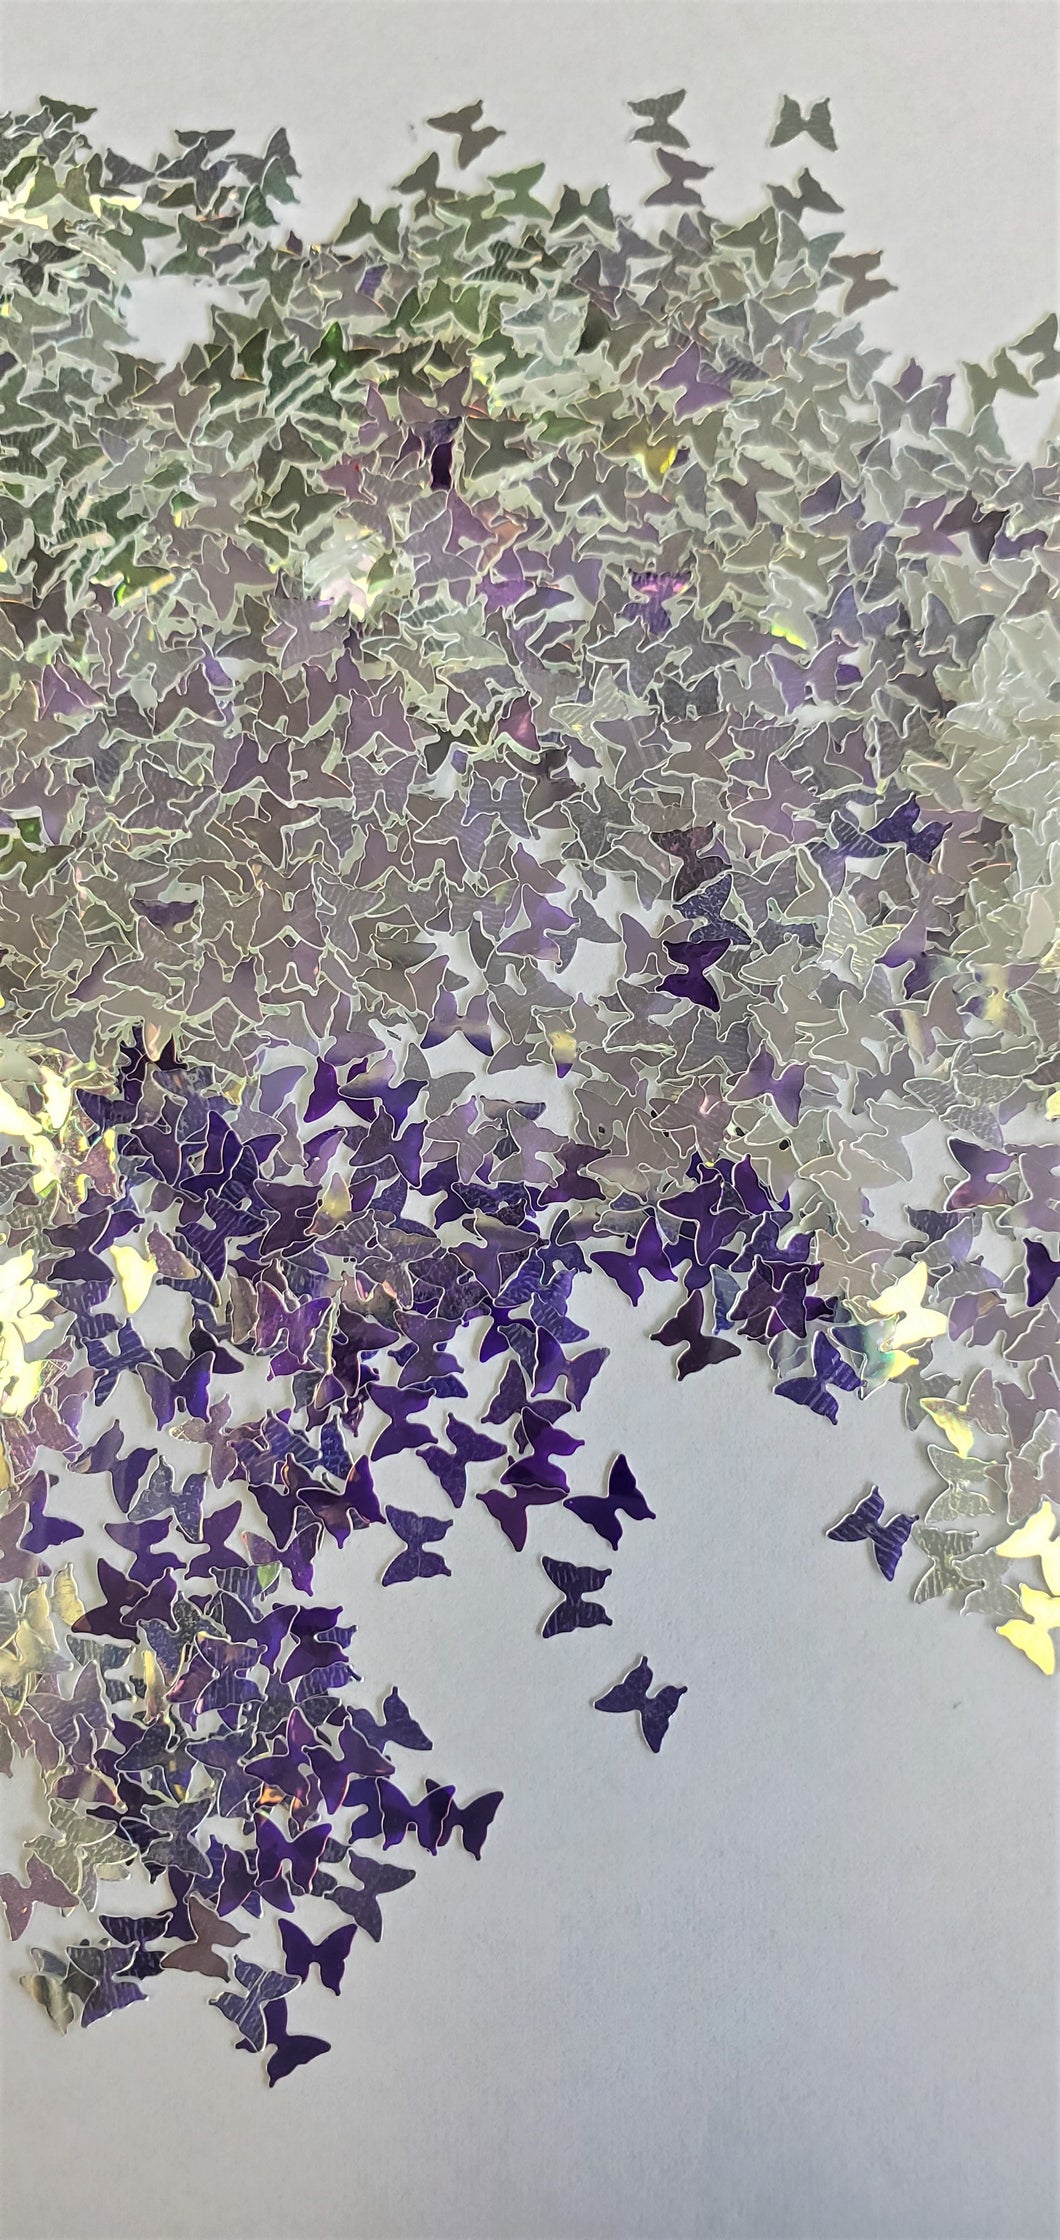 Mirror shine butterfly glitter